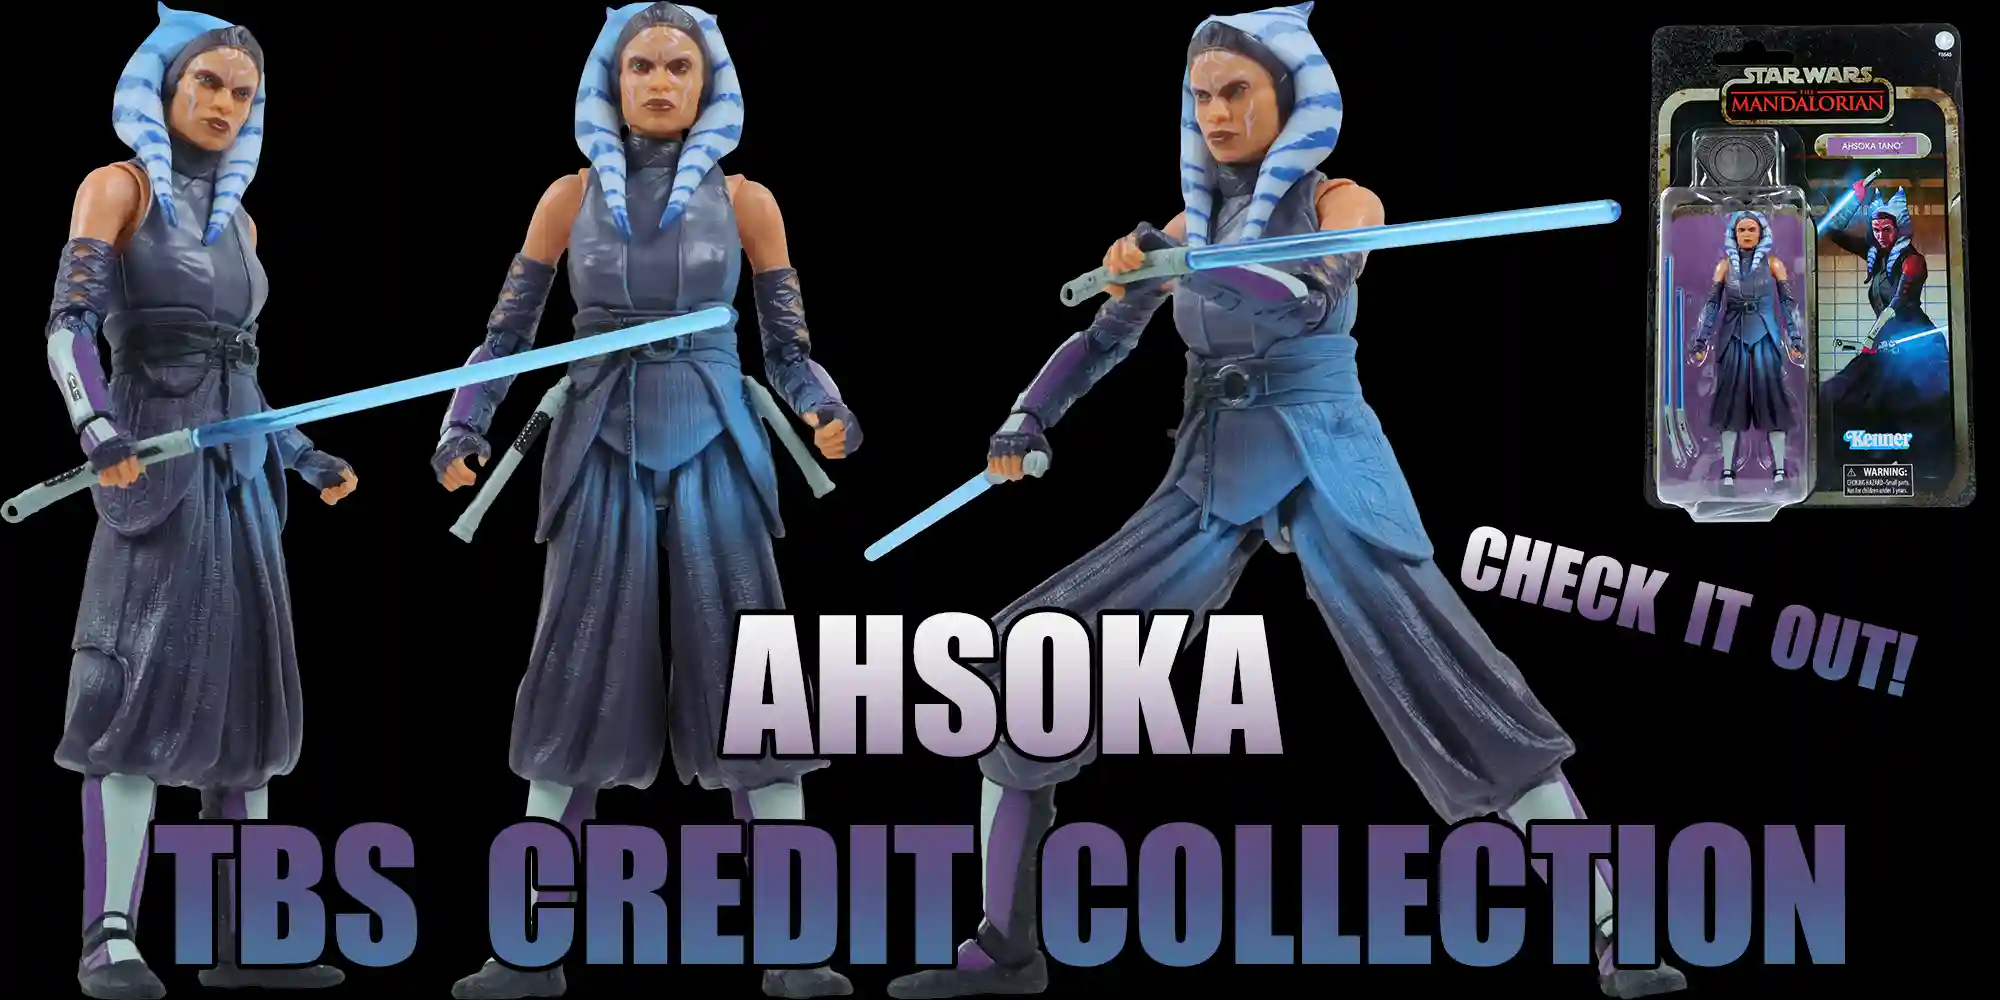 Ahsoka Tano Credit Collection Added - Take A Look!